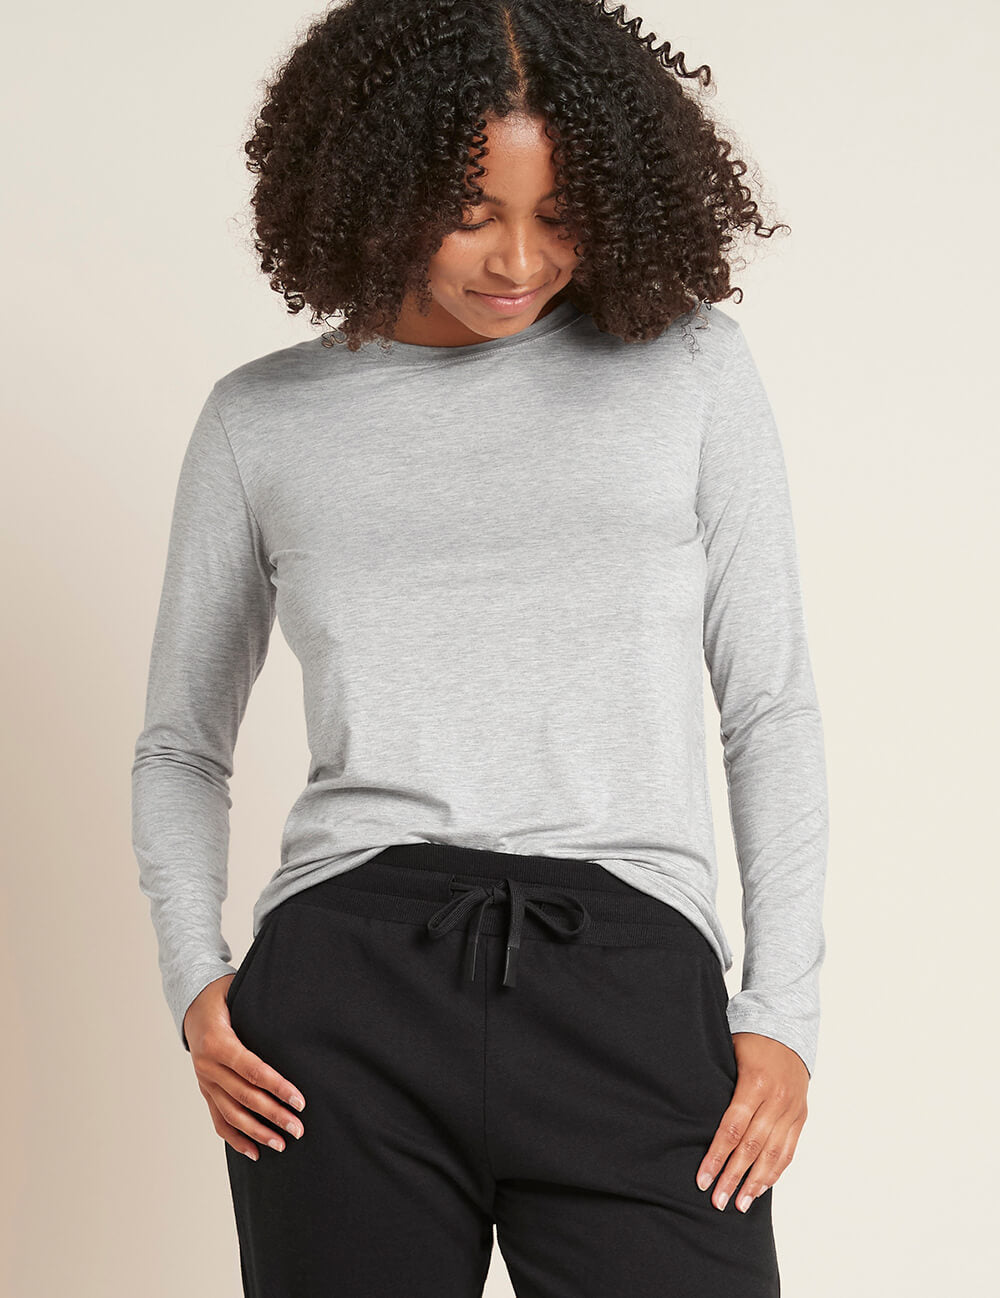 Boody Women's Long Sleeve Round Neck T-Shirt Light Grey Front